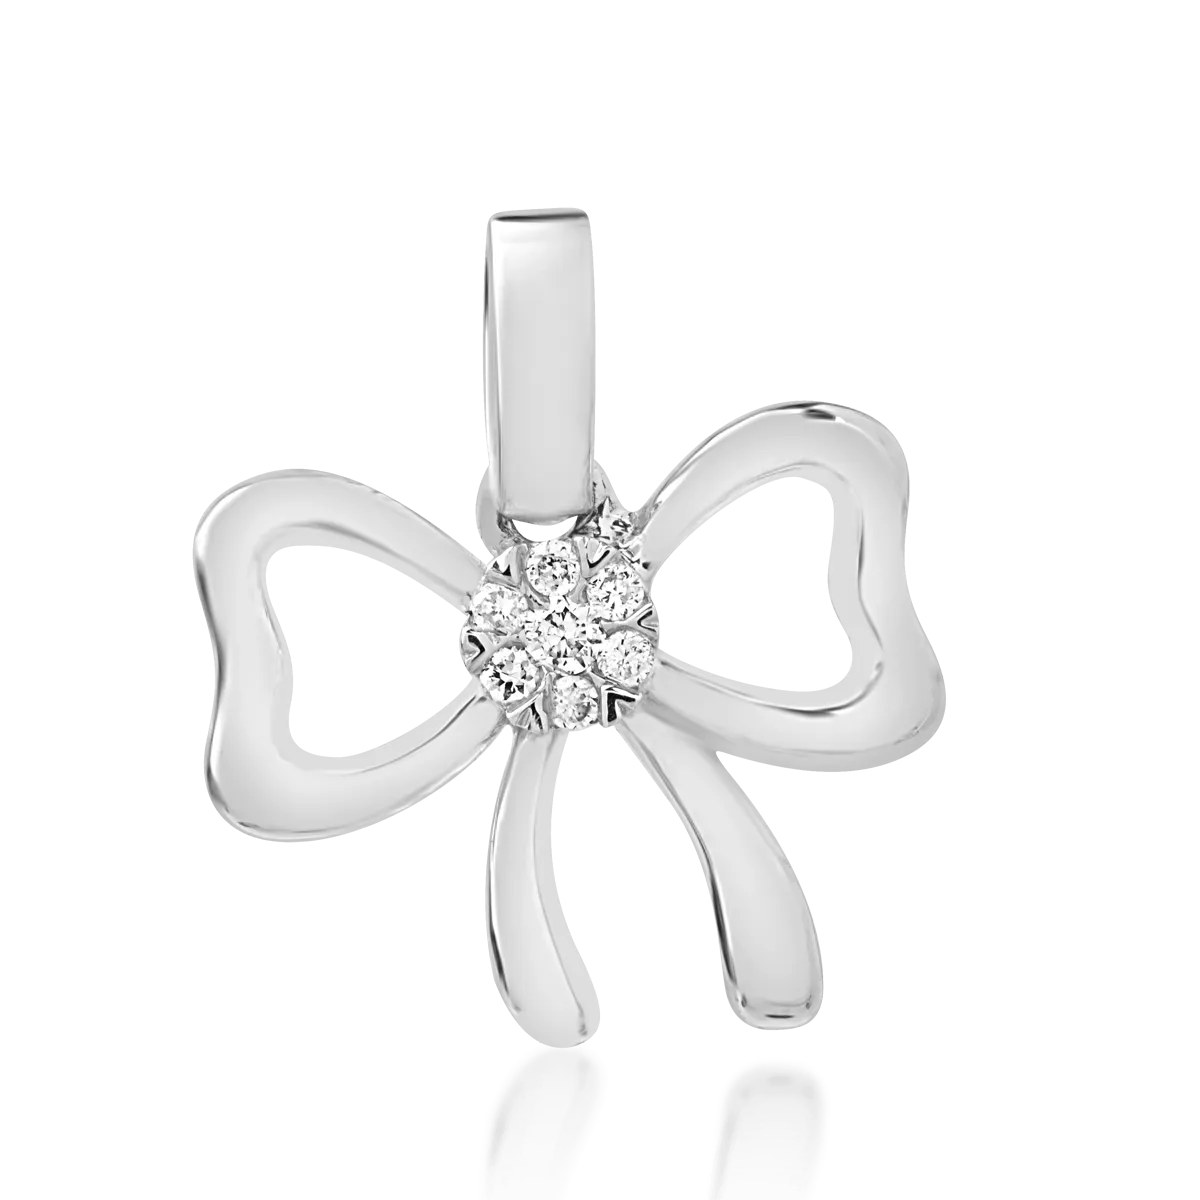 18K white gold tiny knot pendant with 0.025ct diamonds